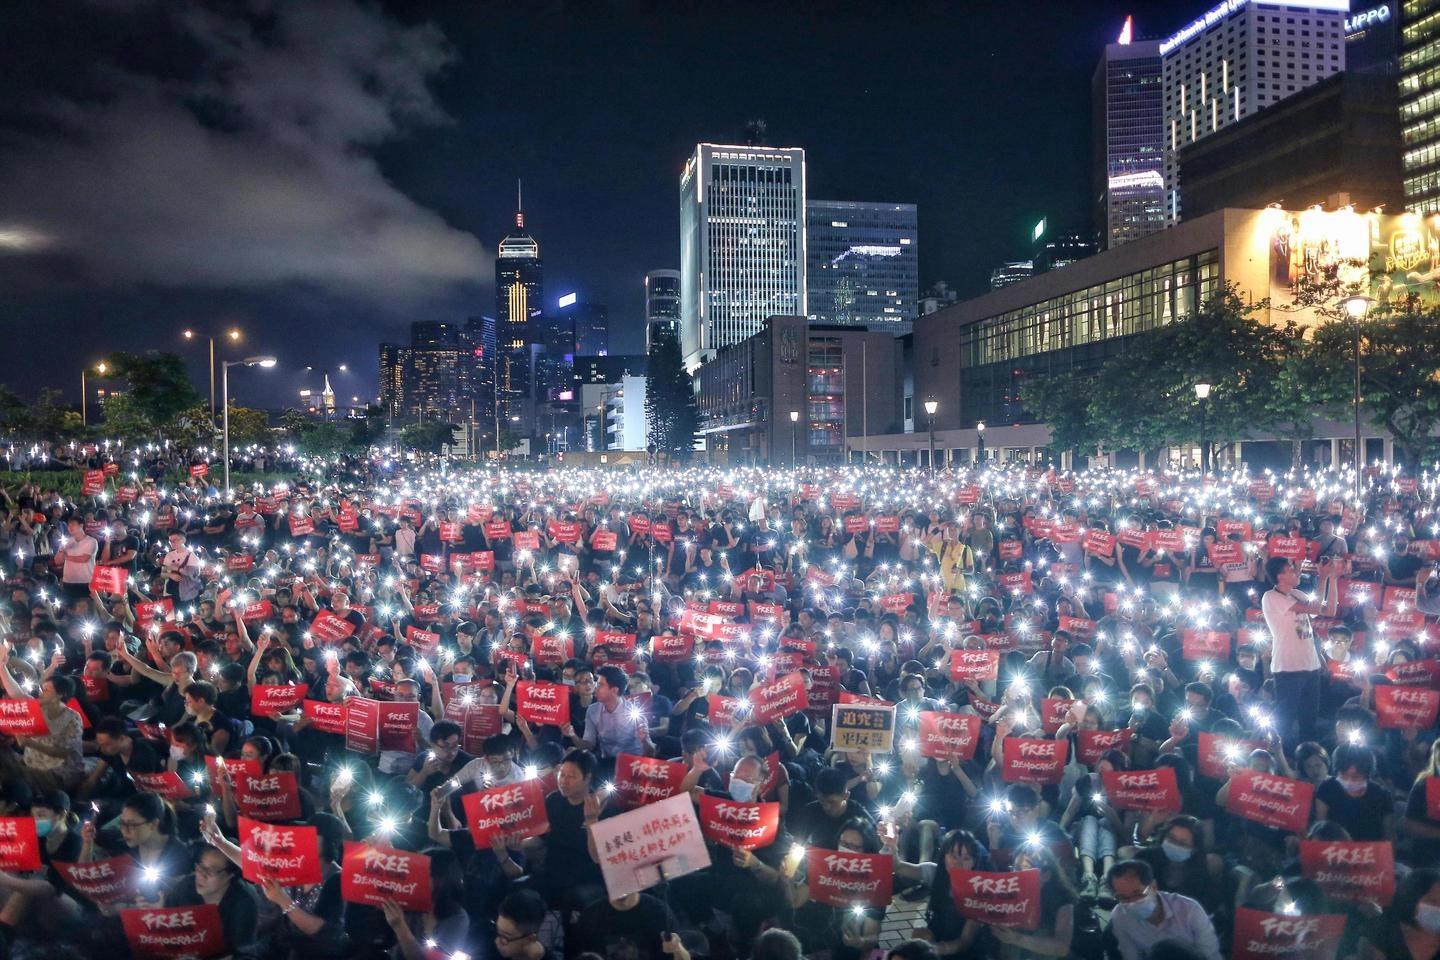 Free Hong Kong, manifestazione di piazza (Epa Ansa)